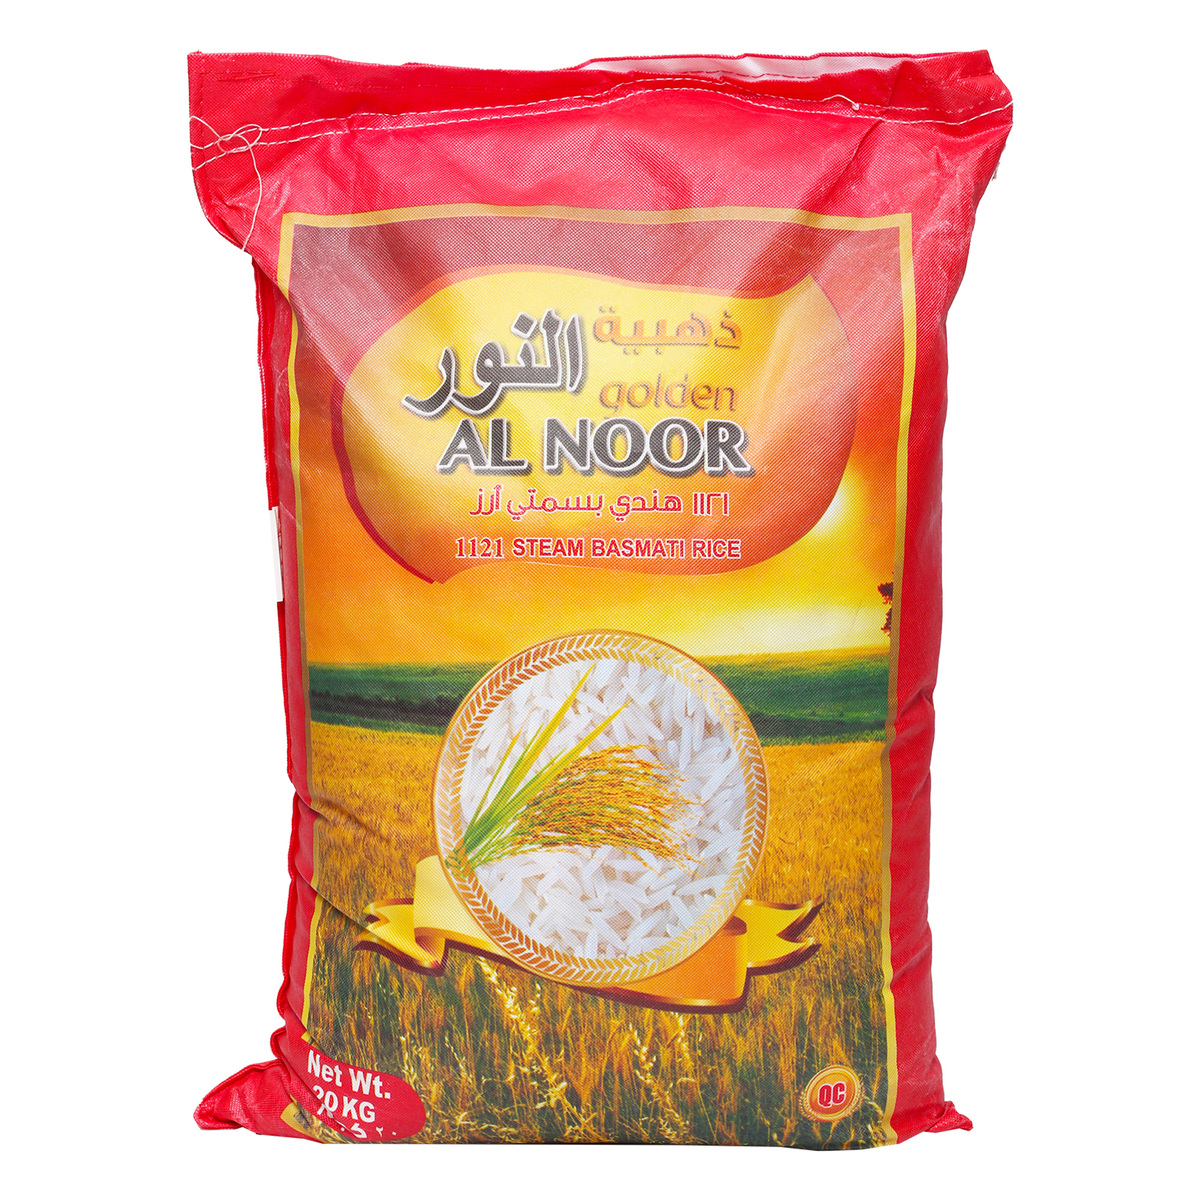 Al Noor Golden 1121 Steam Basmati Rice 20 kg